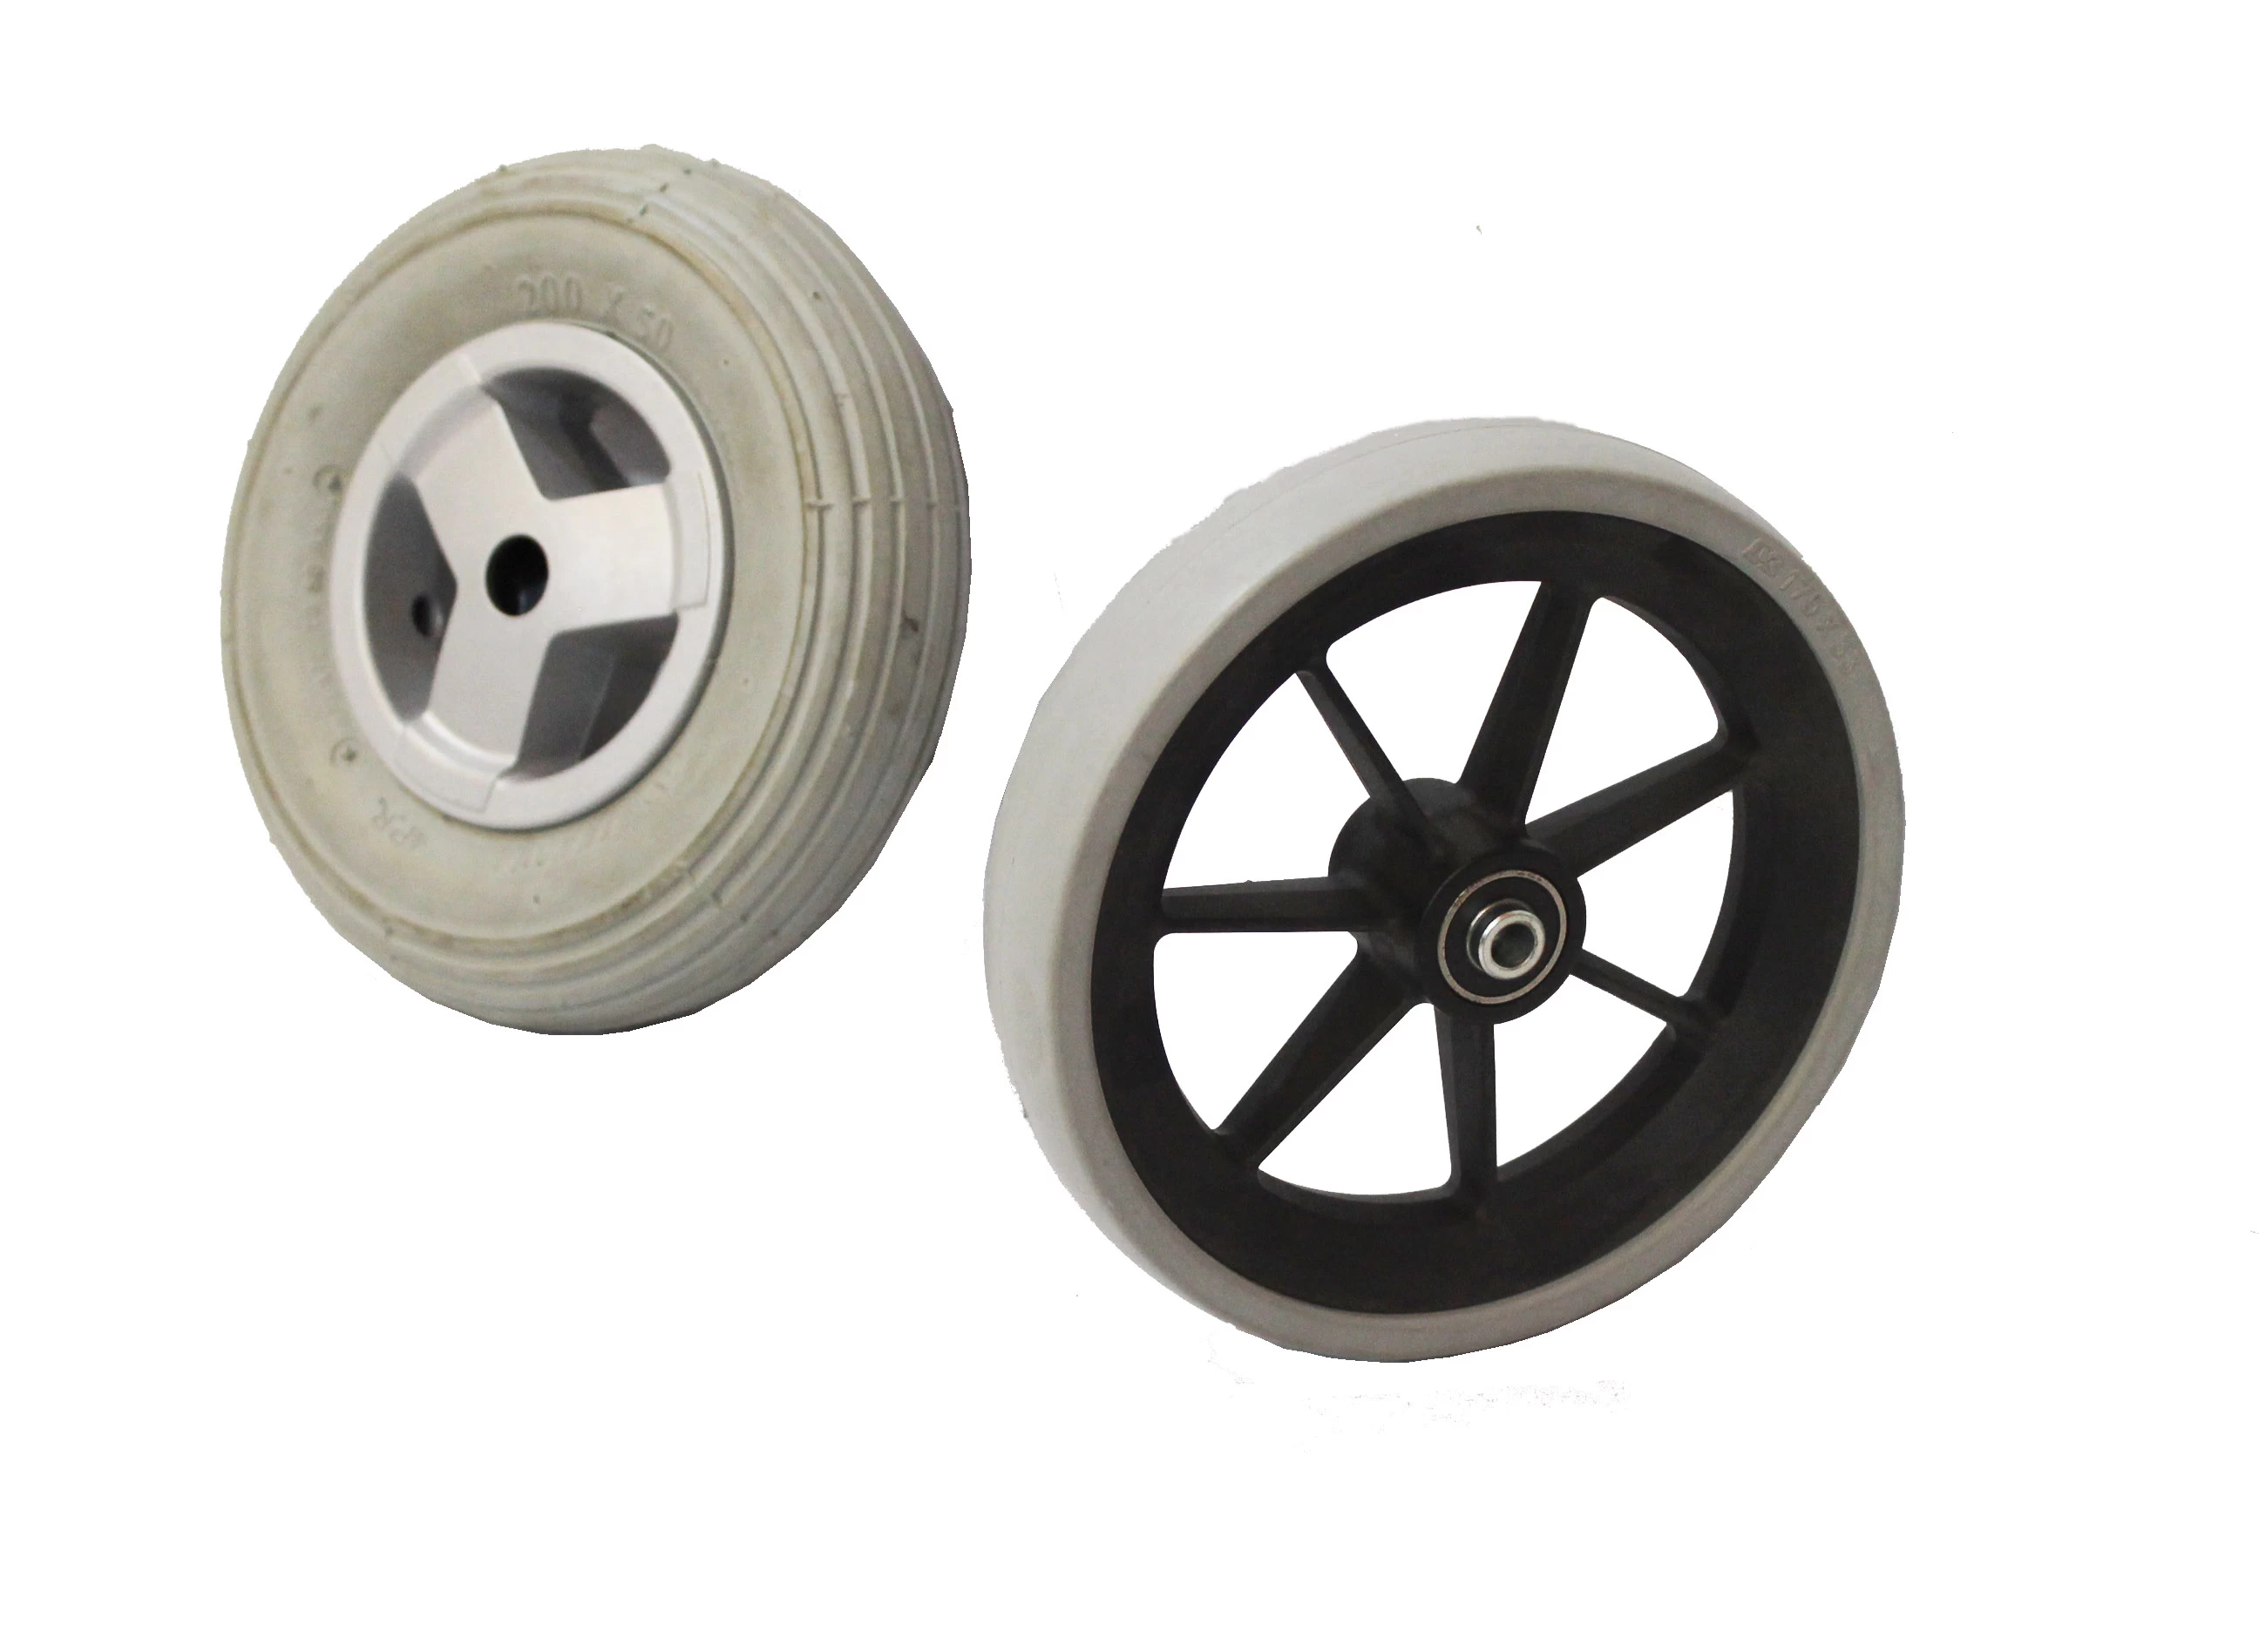 tweel airless tires:wheelbarrow wheel tyre:400-8 4pr wheelbarrow tyre